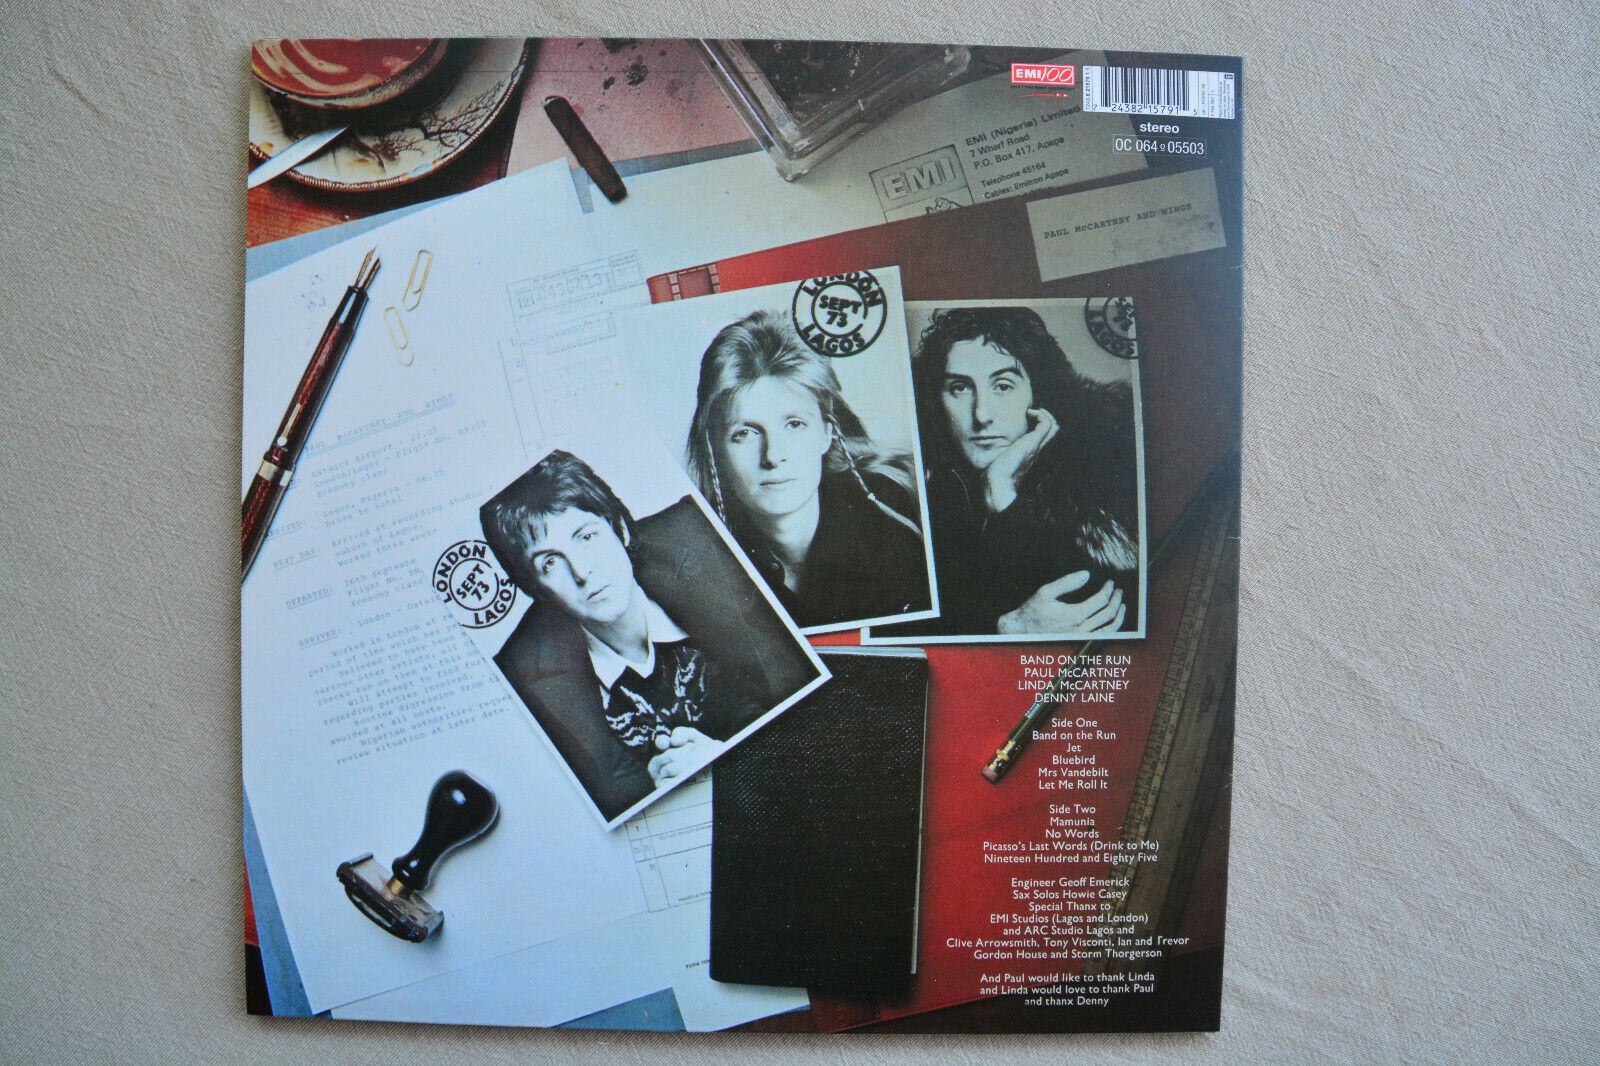 popsike.com - Paul McCartney/Wings Band On The Run EMI 100 LP CENT